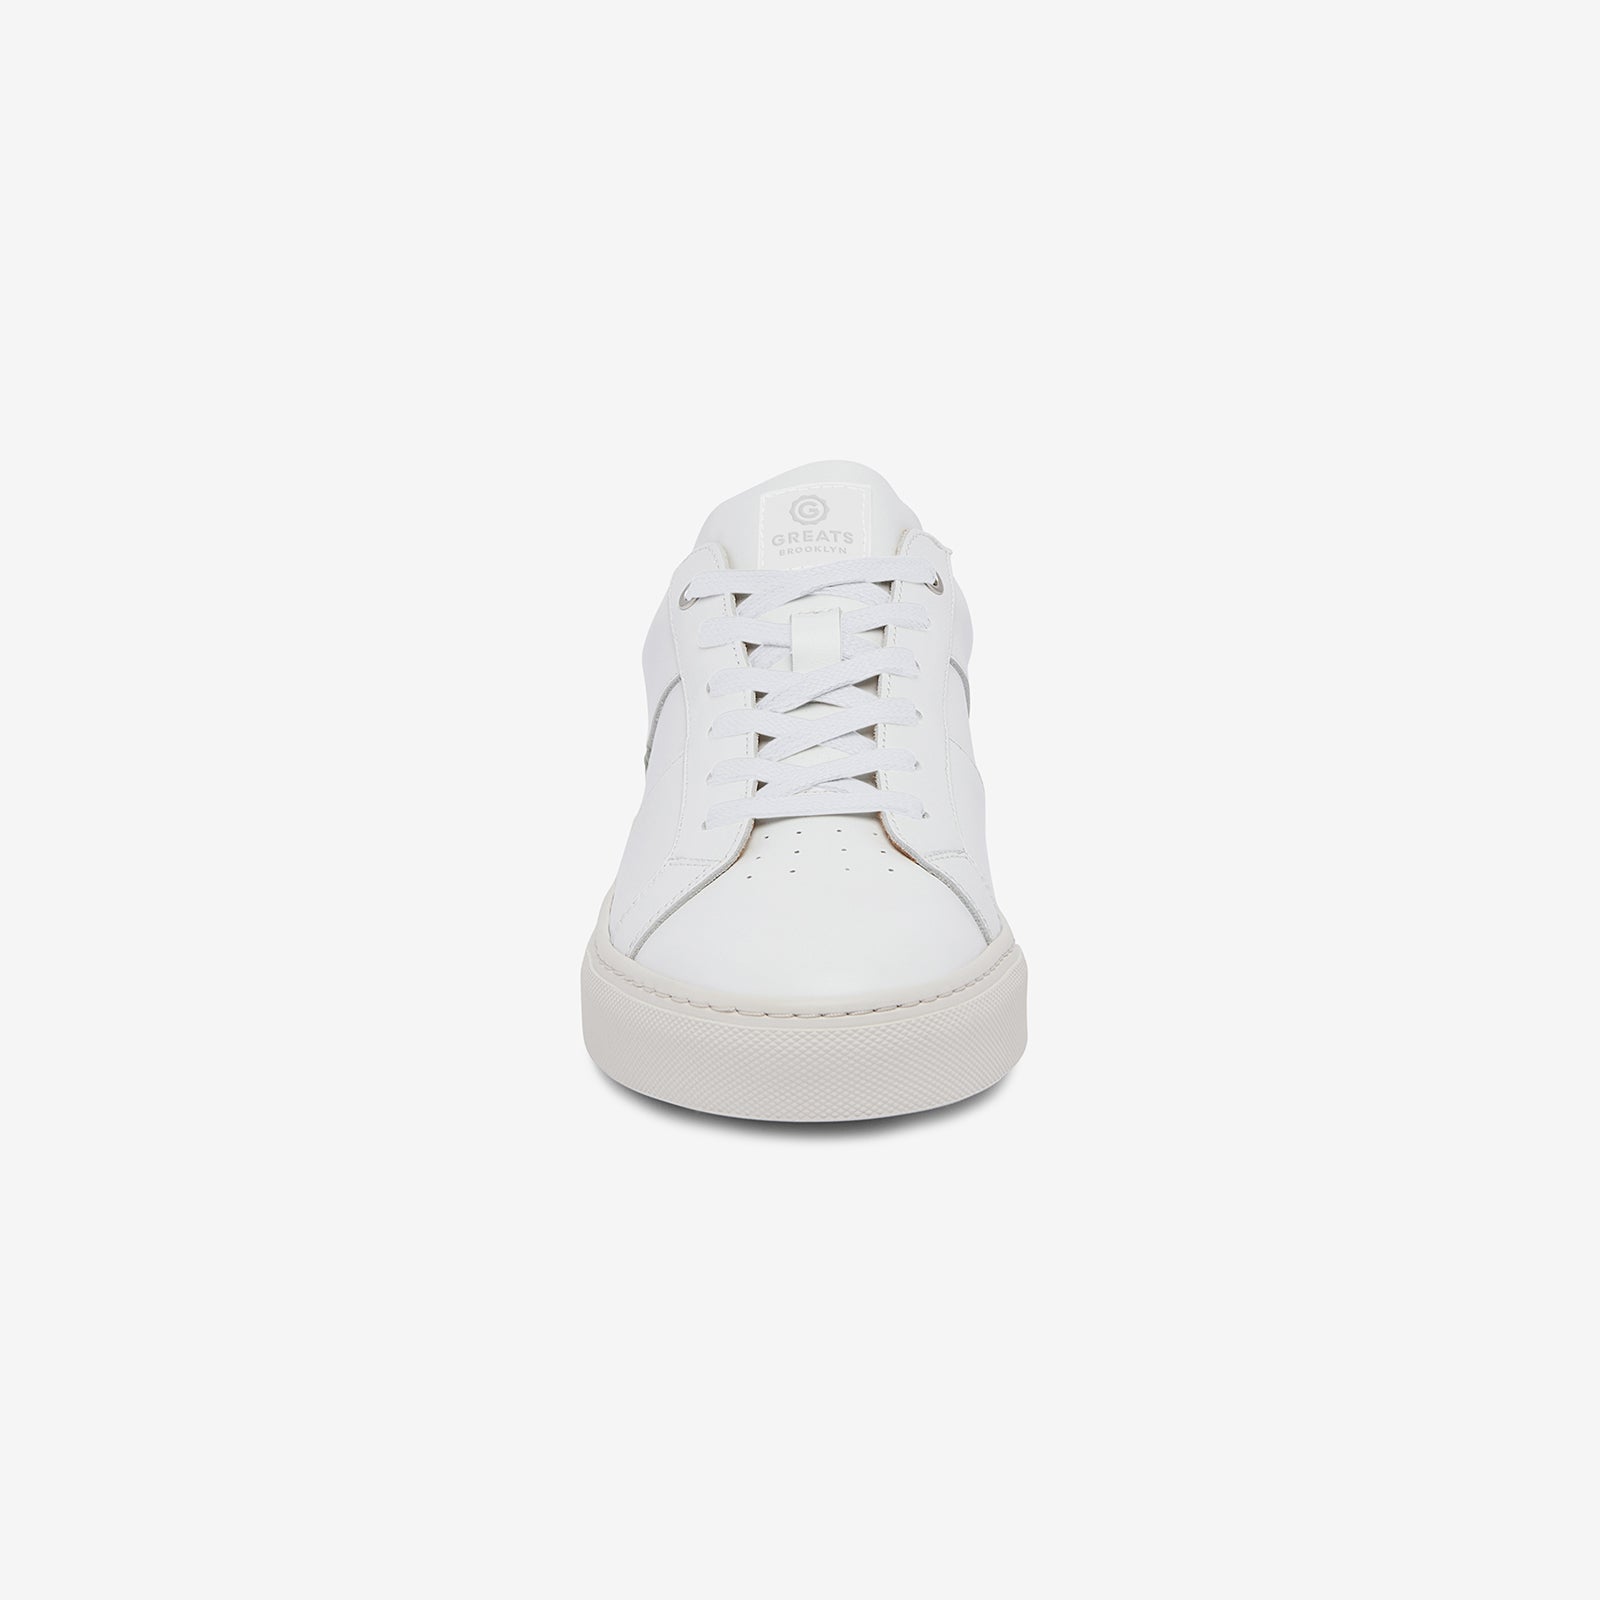 GREATS Premium Shoelaces - Blanco